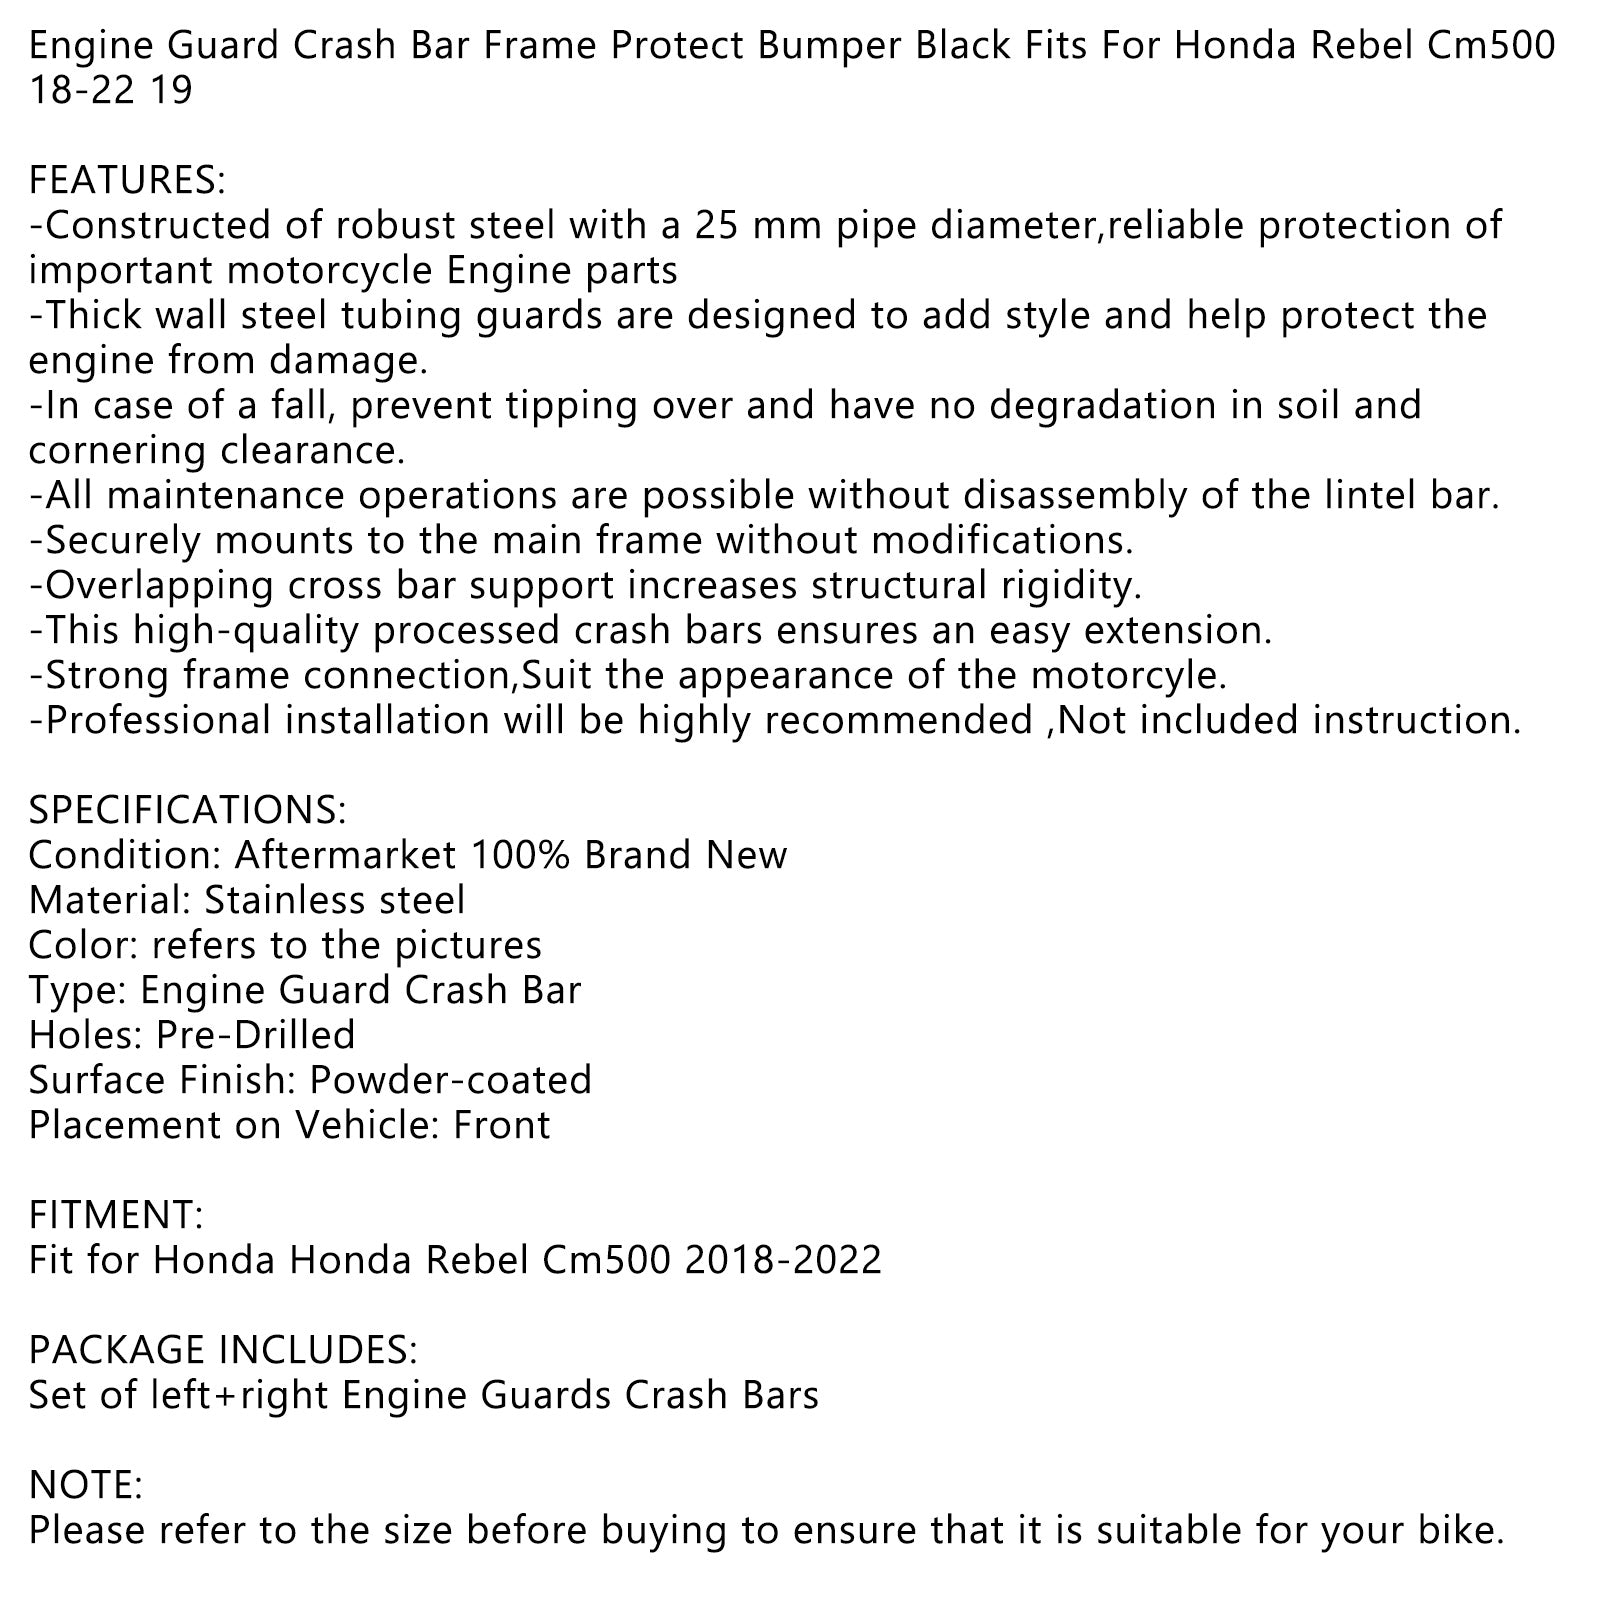 Engine Guard Crash Bar Frame Protector Bumper For Honda Rebel Cm500 18-22 19 Generic